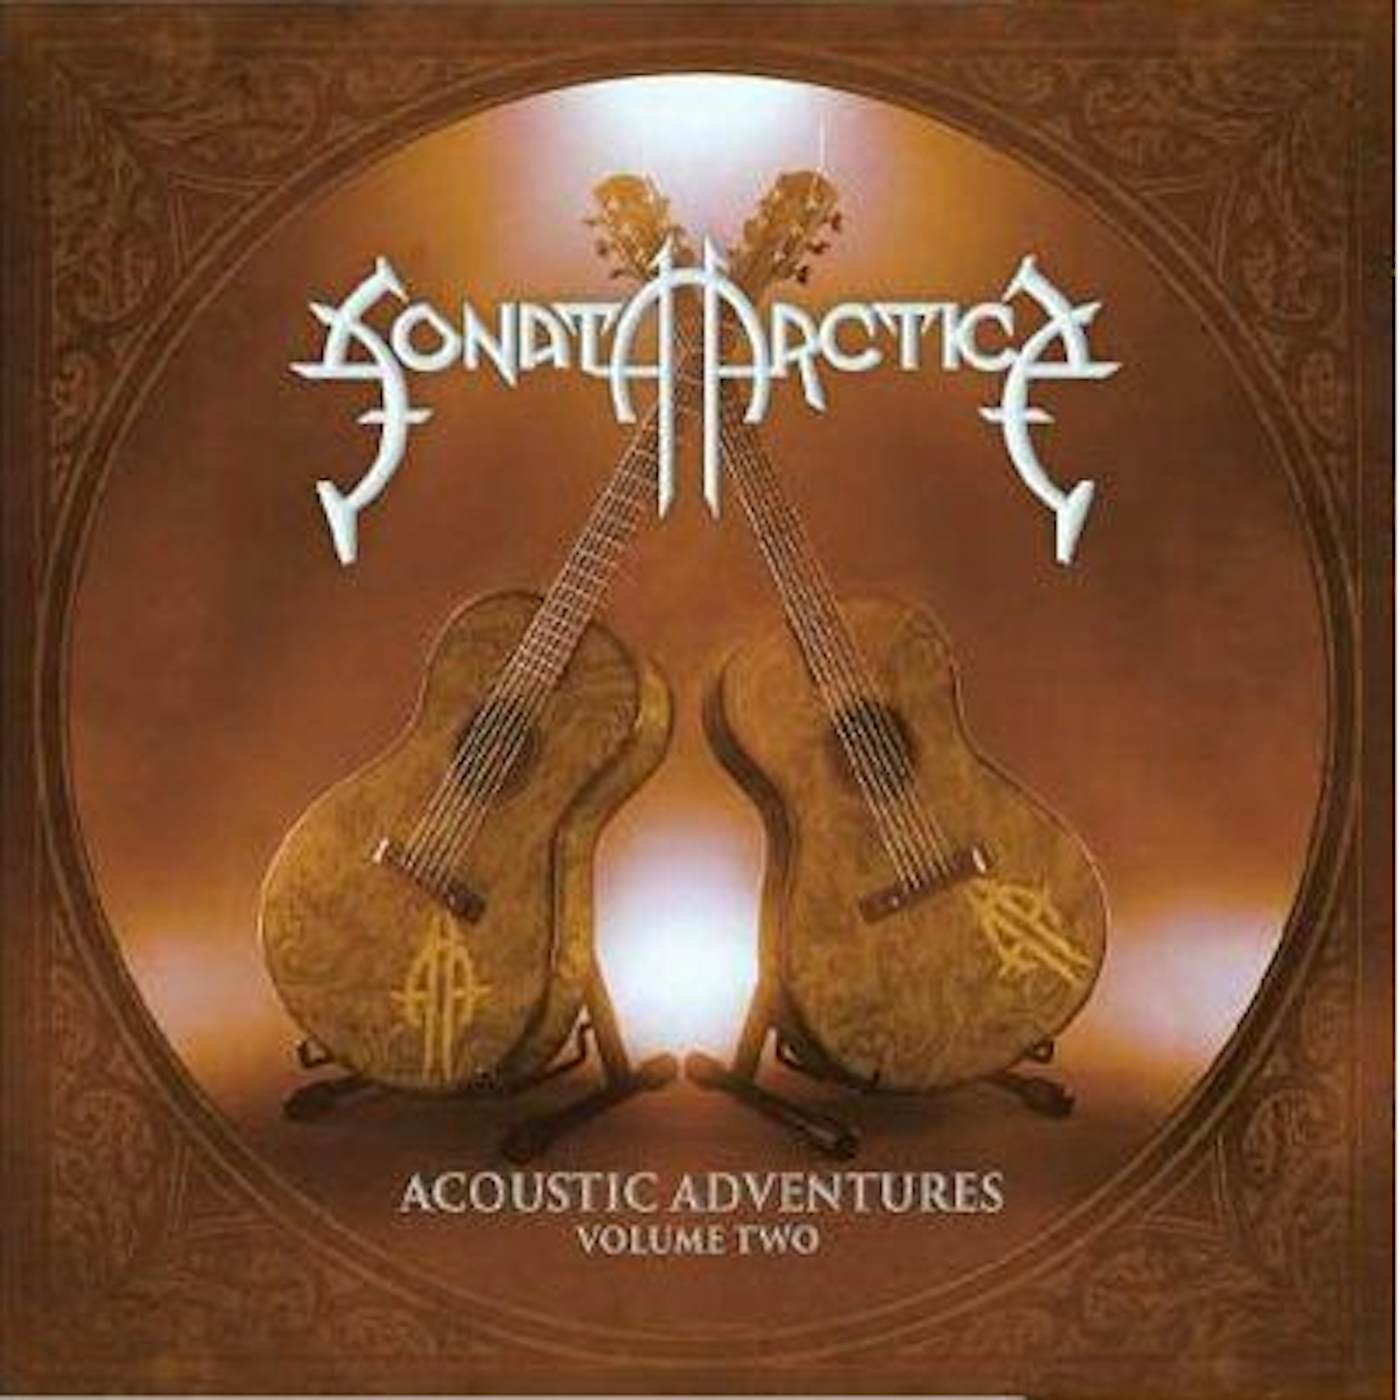 Sonata Arctica Acoustic Adventures - Volume Two Vinyl Record